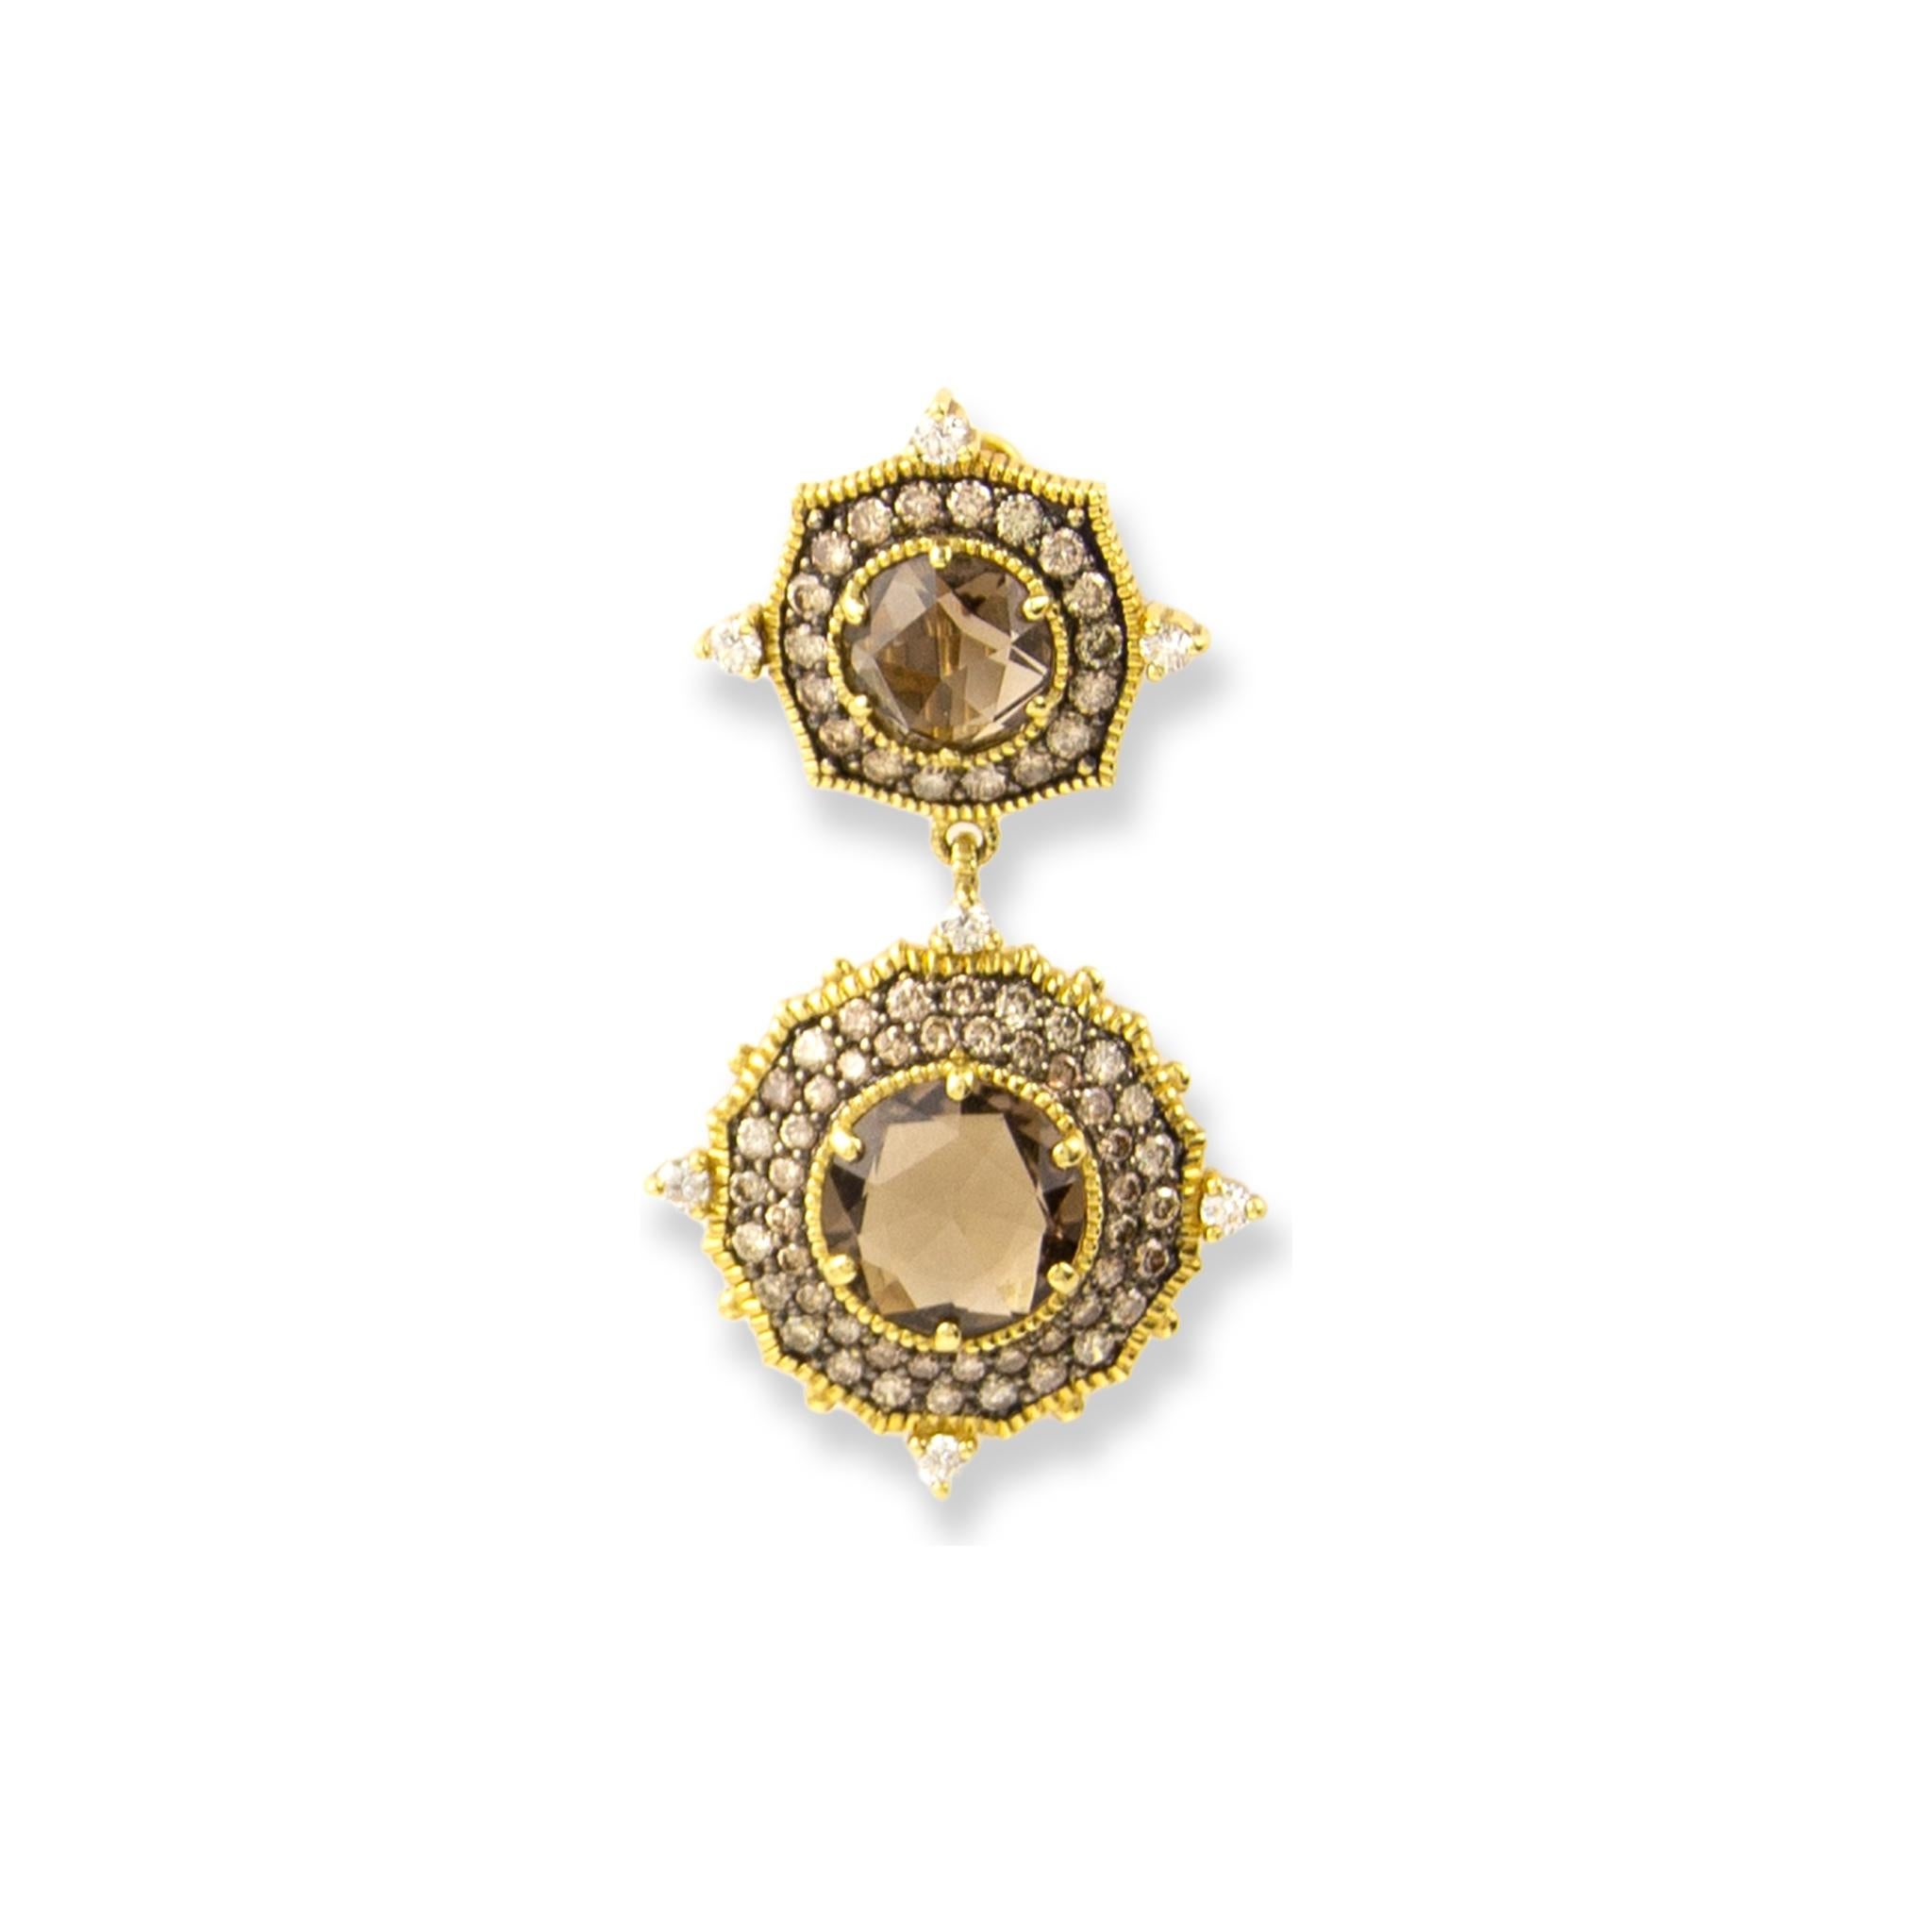 Judith Ripka 18K Yellow Gold Earrings
Blue Quartz: 9.10ctw
Diamonds: 3.15ctw
SKU: JR01014
Retail price: $12,600.00